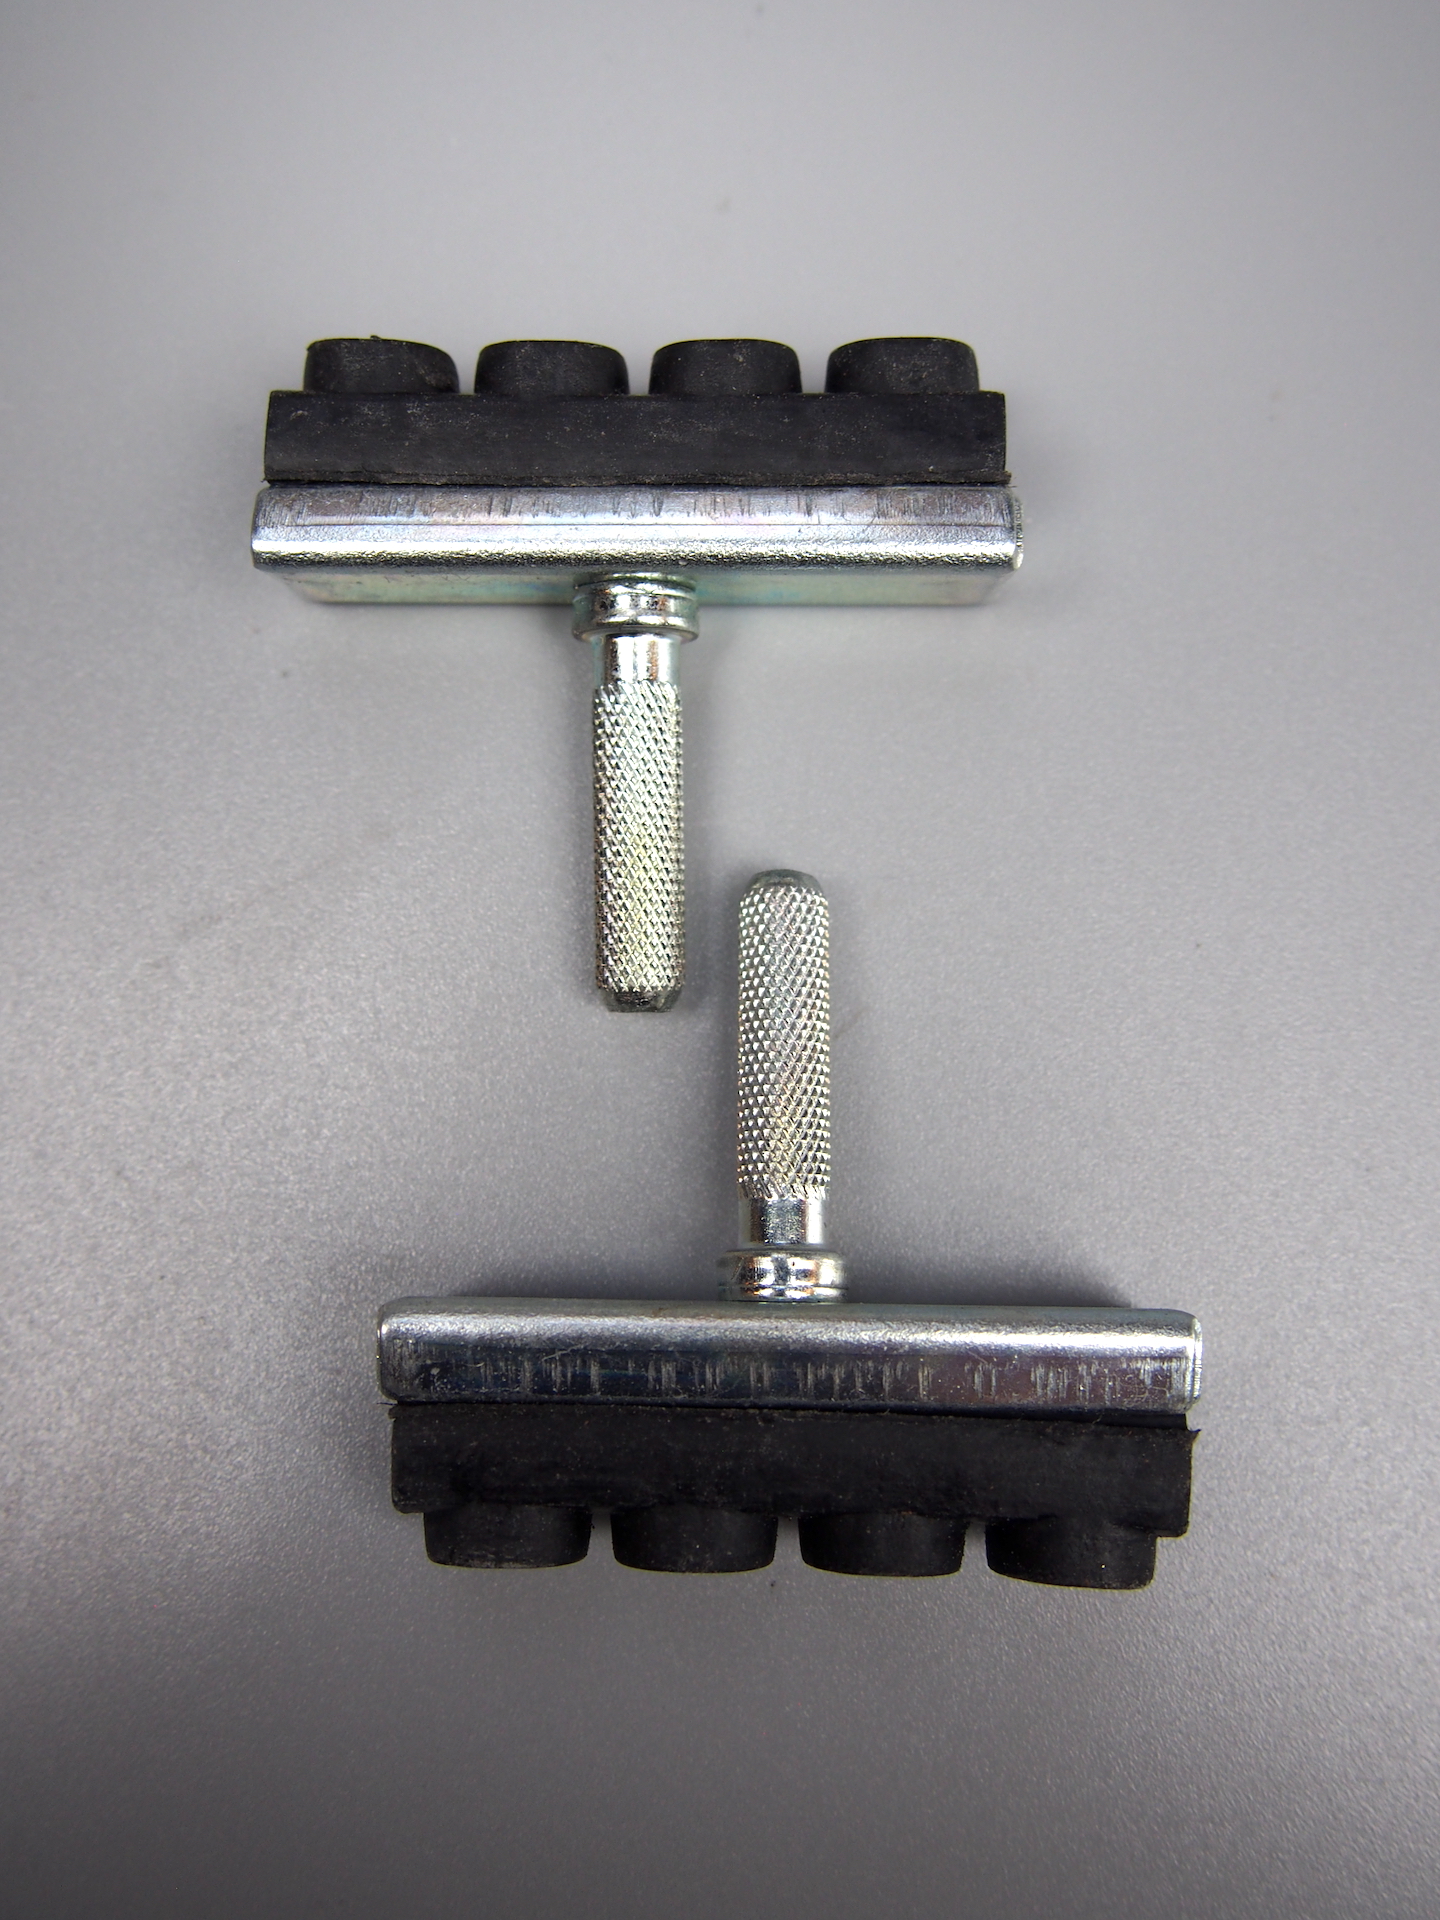 Steel cantilever brake blocks – Mafac style